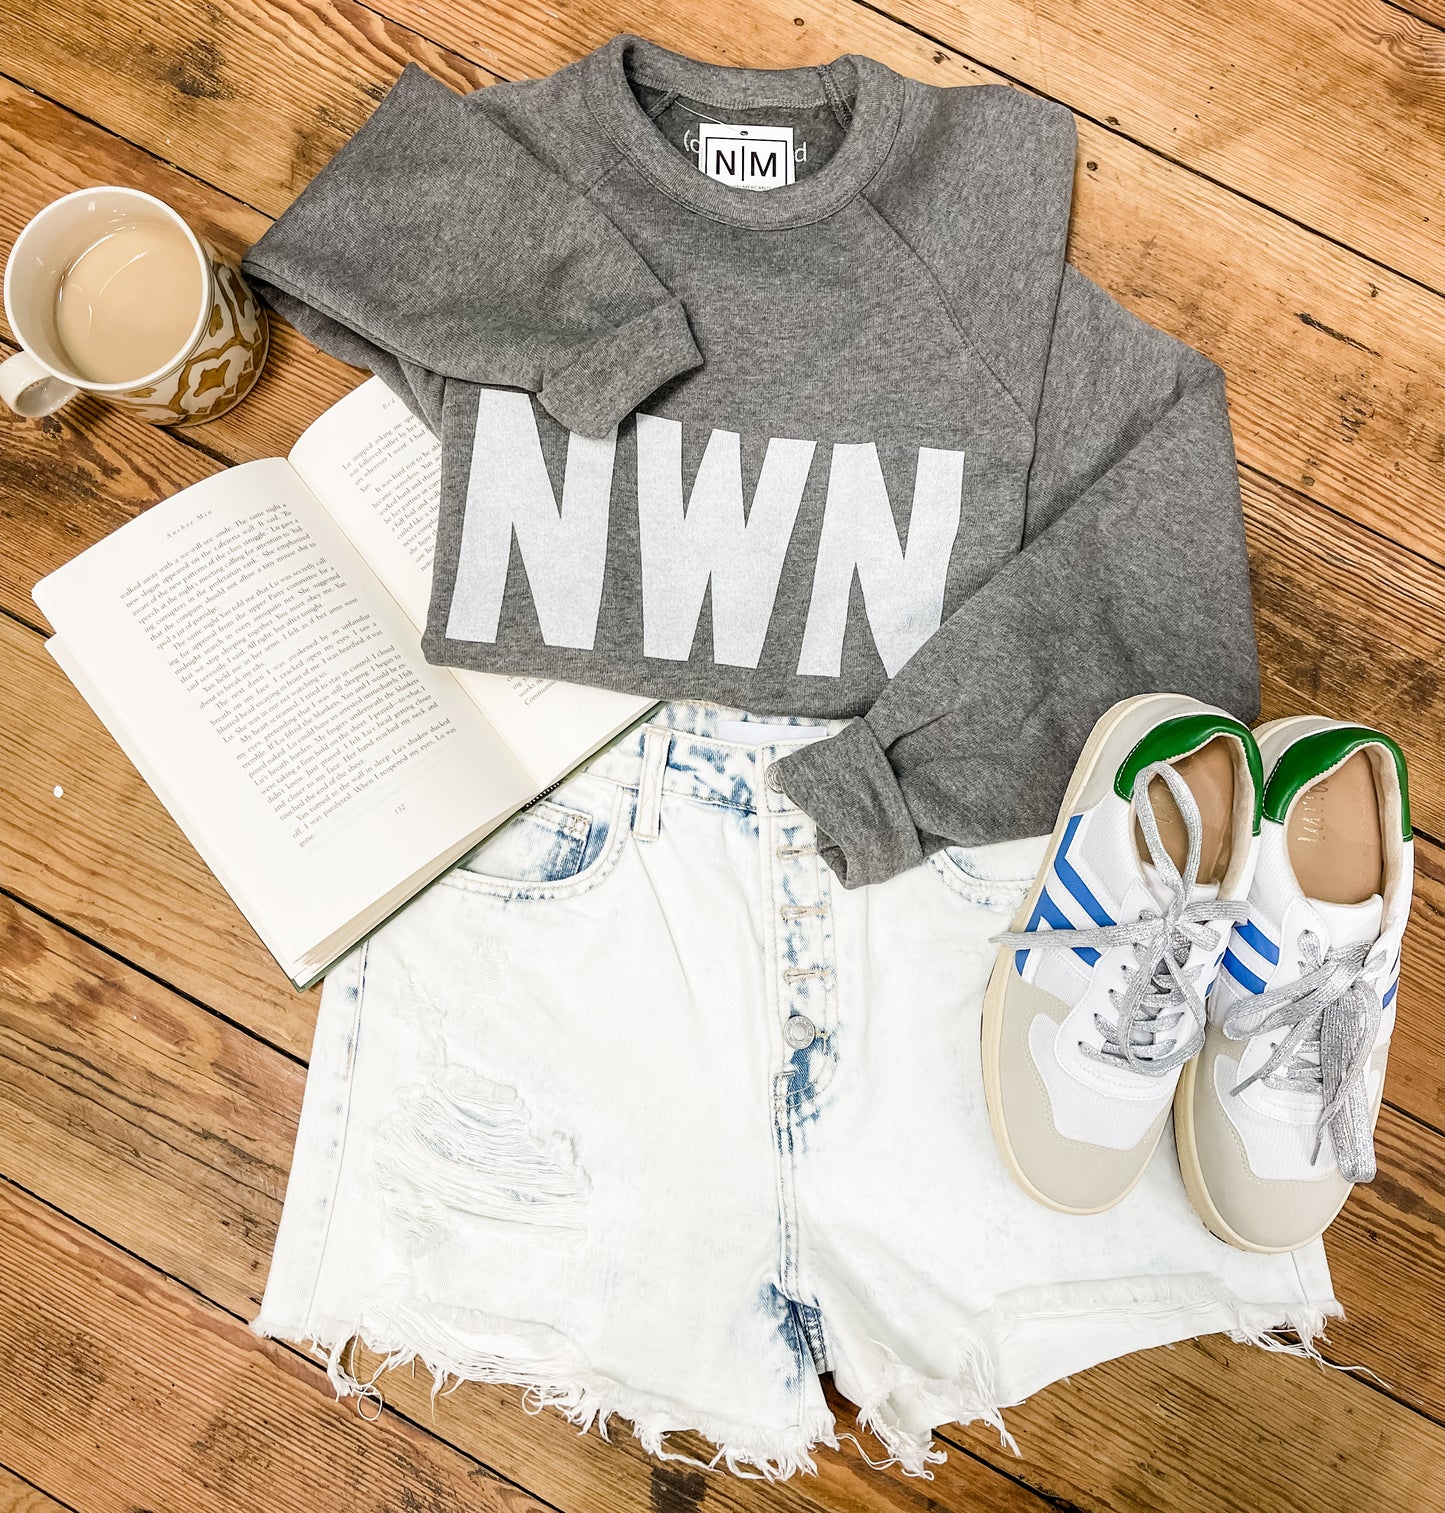 Fleece NWN (Newnan) Sweatshirt | Grey